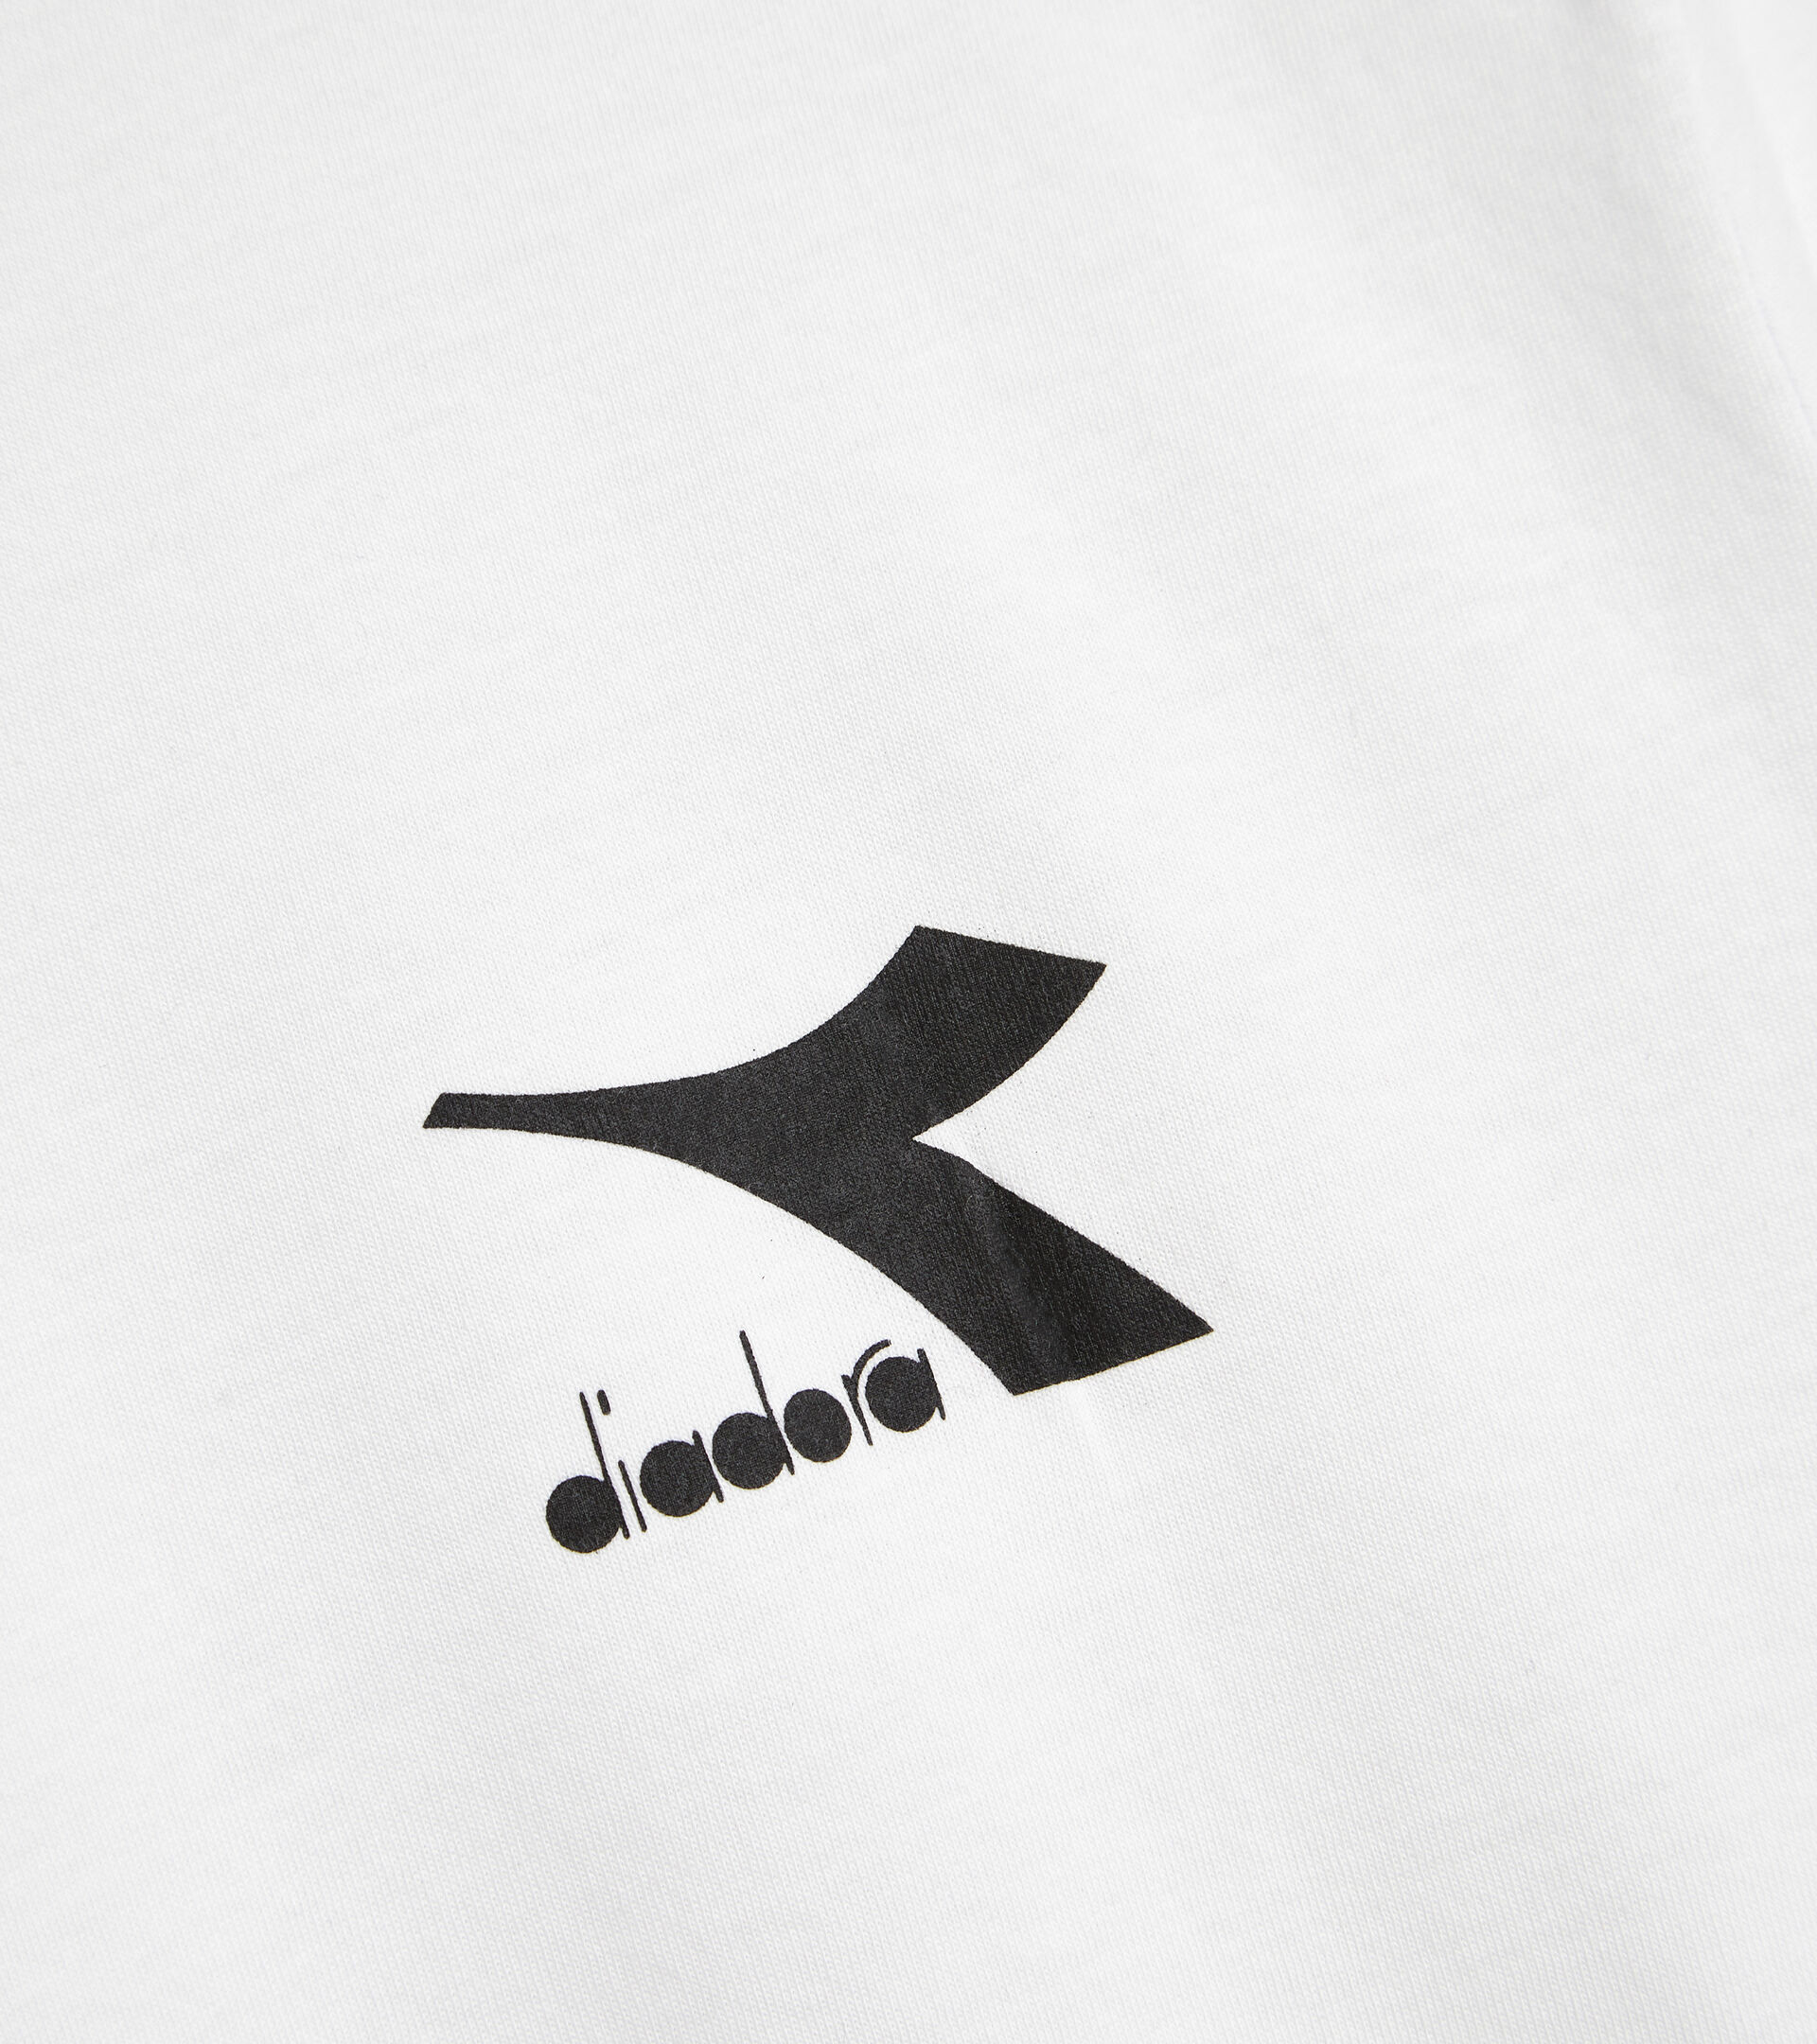 Cotton T-shirt - Men T-SHIRT SS CORE OPTICAL WHITE - Diadora